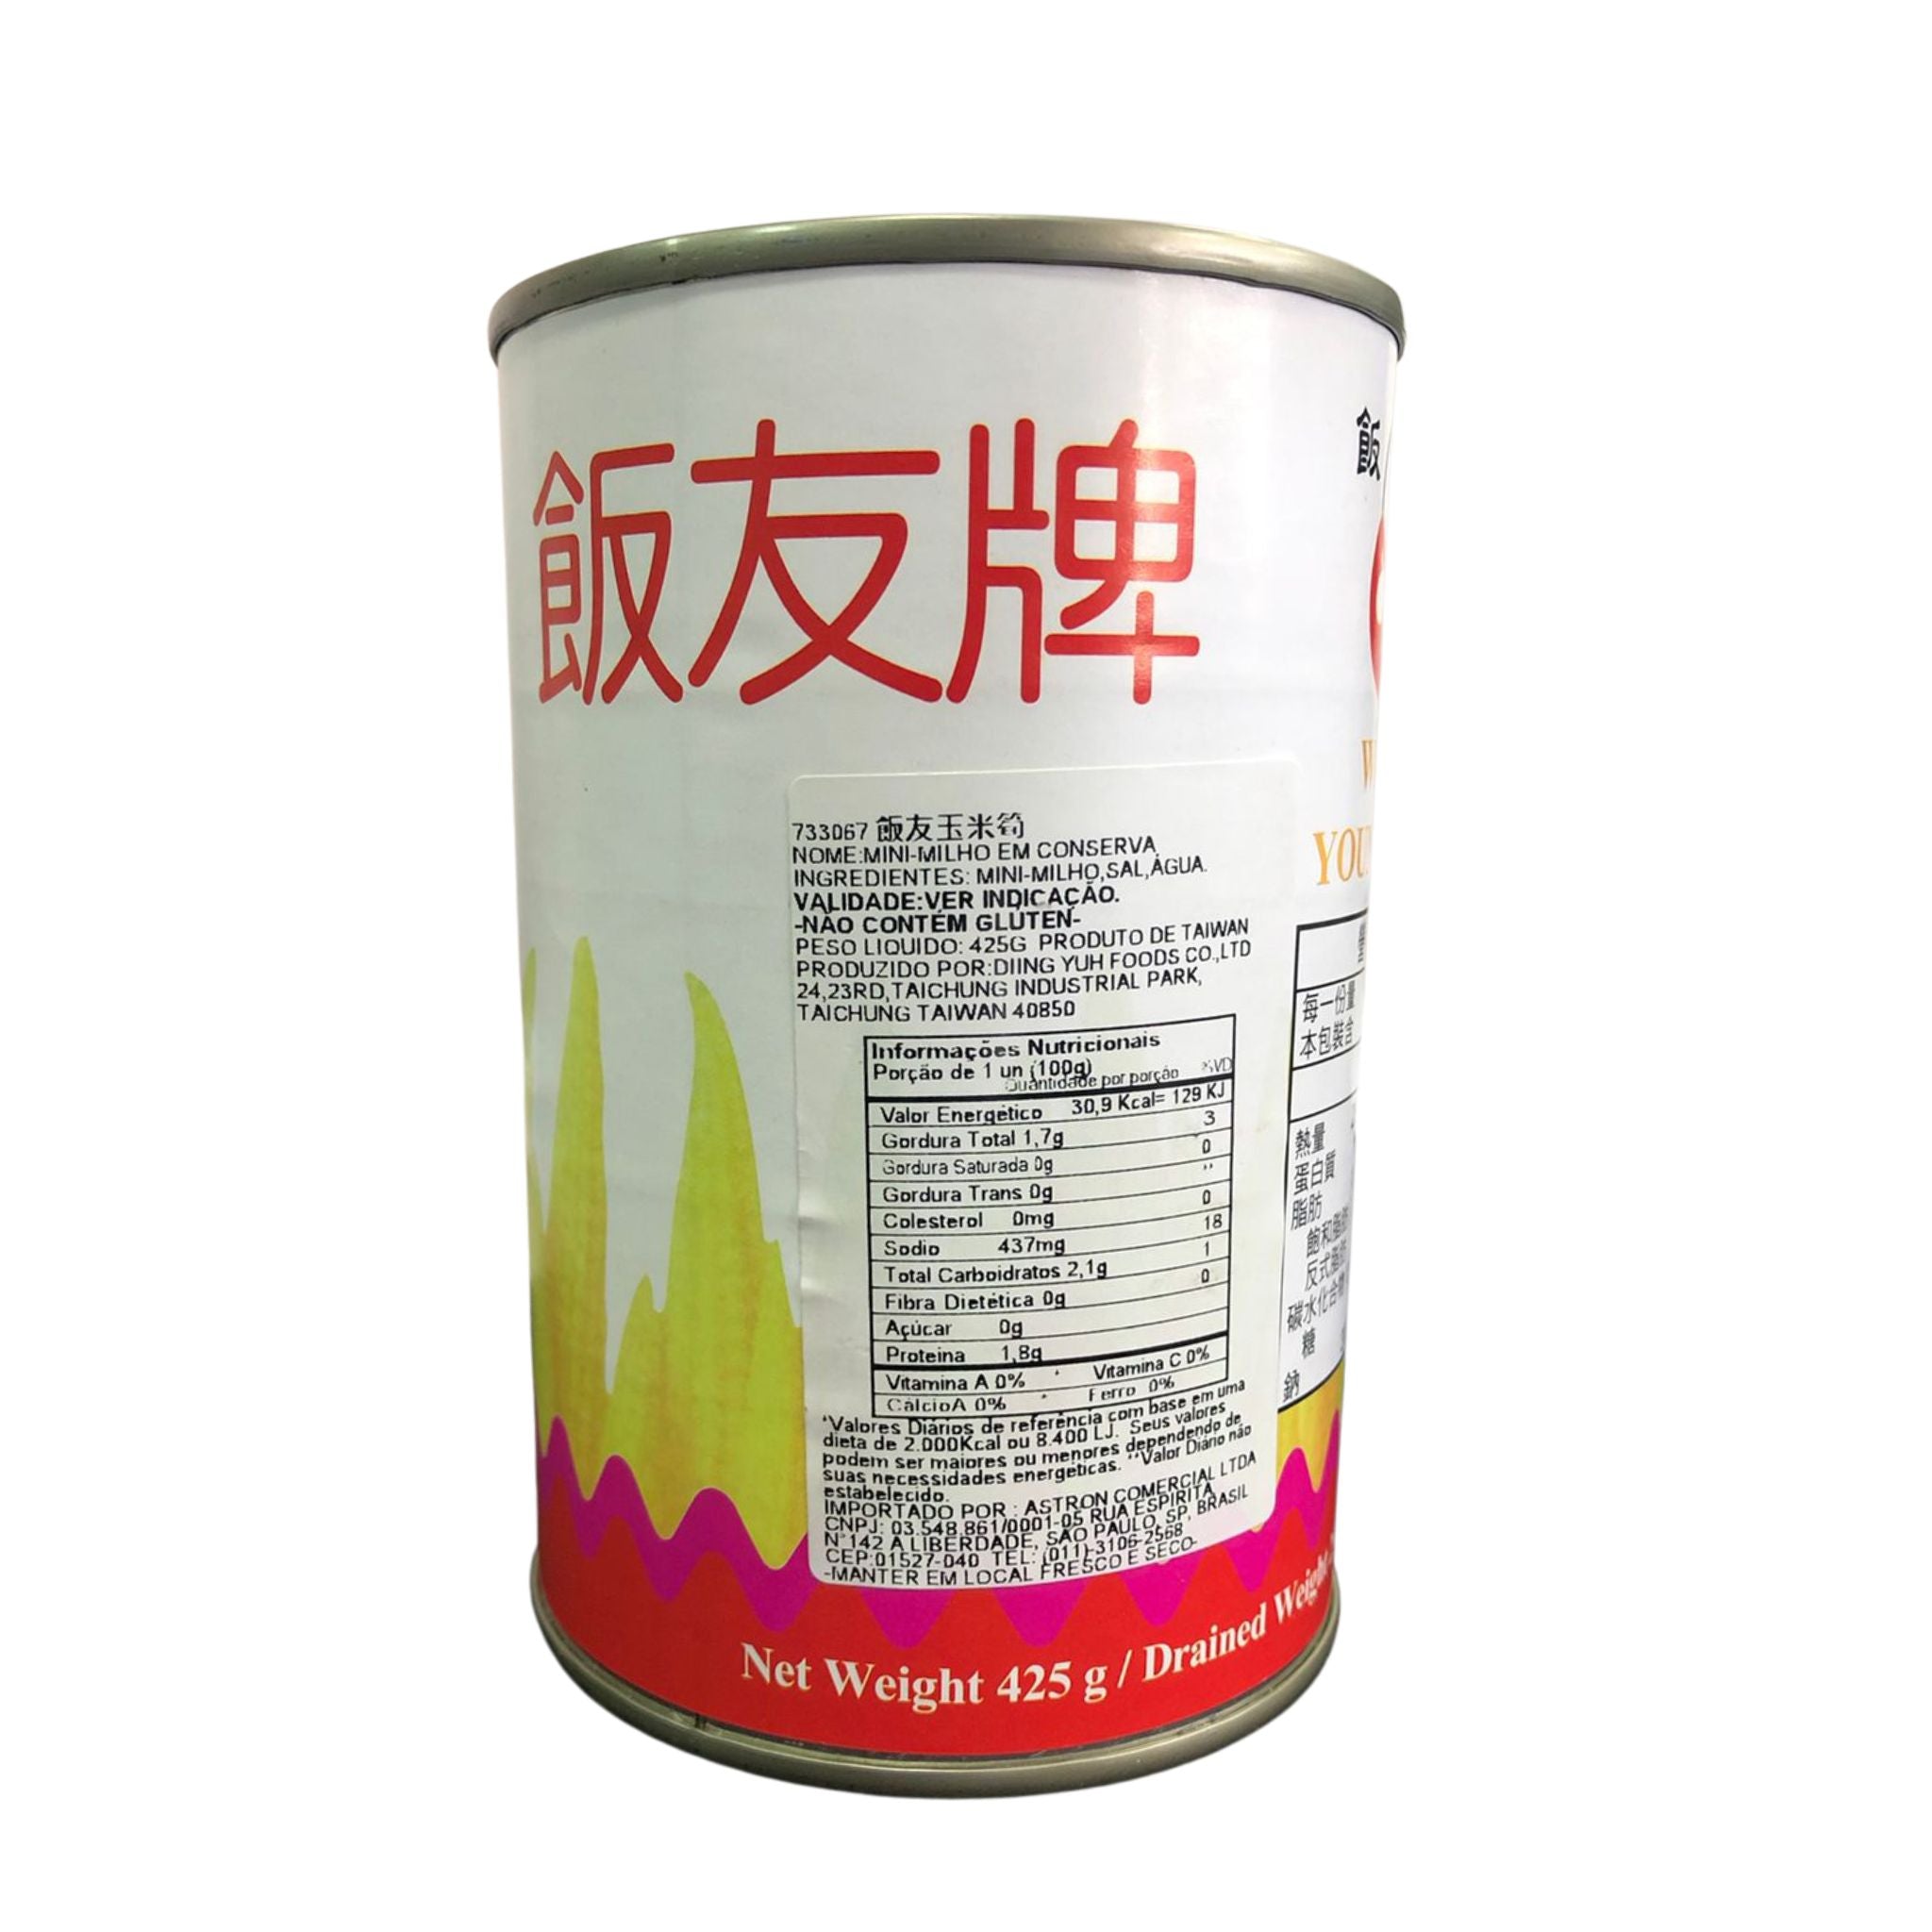 Lata de Mini Milho em Conserva - Taiwan -  425g - Mei Wei